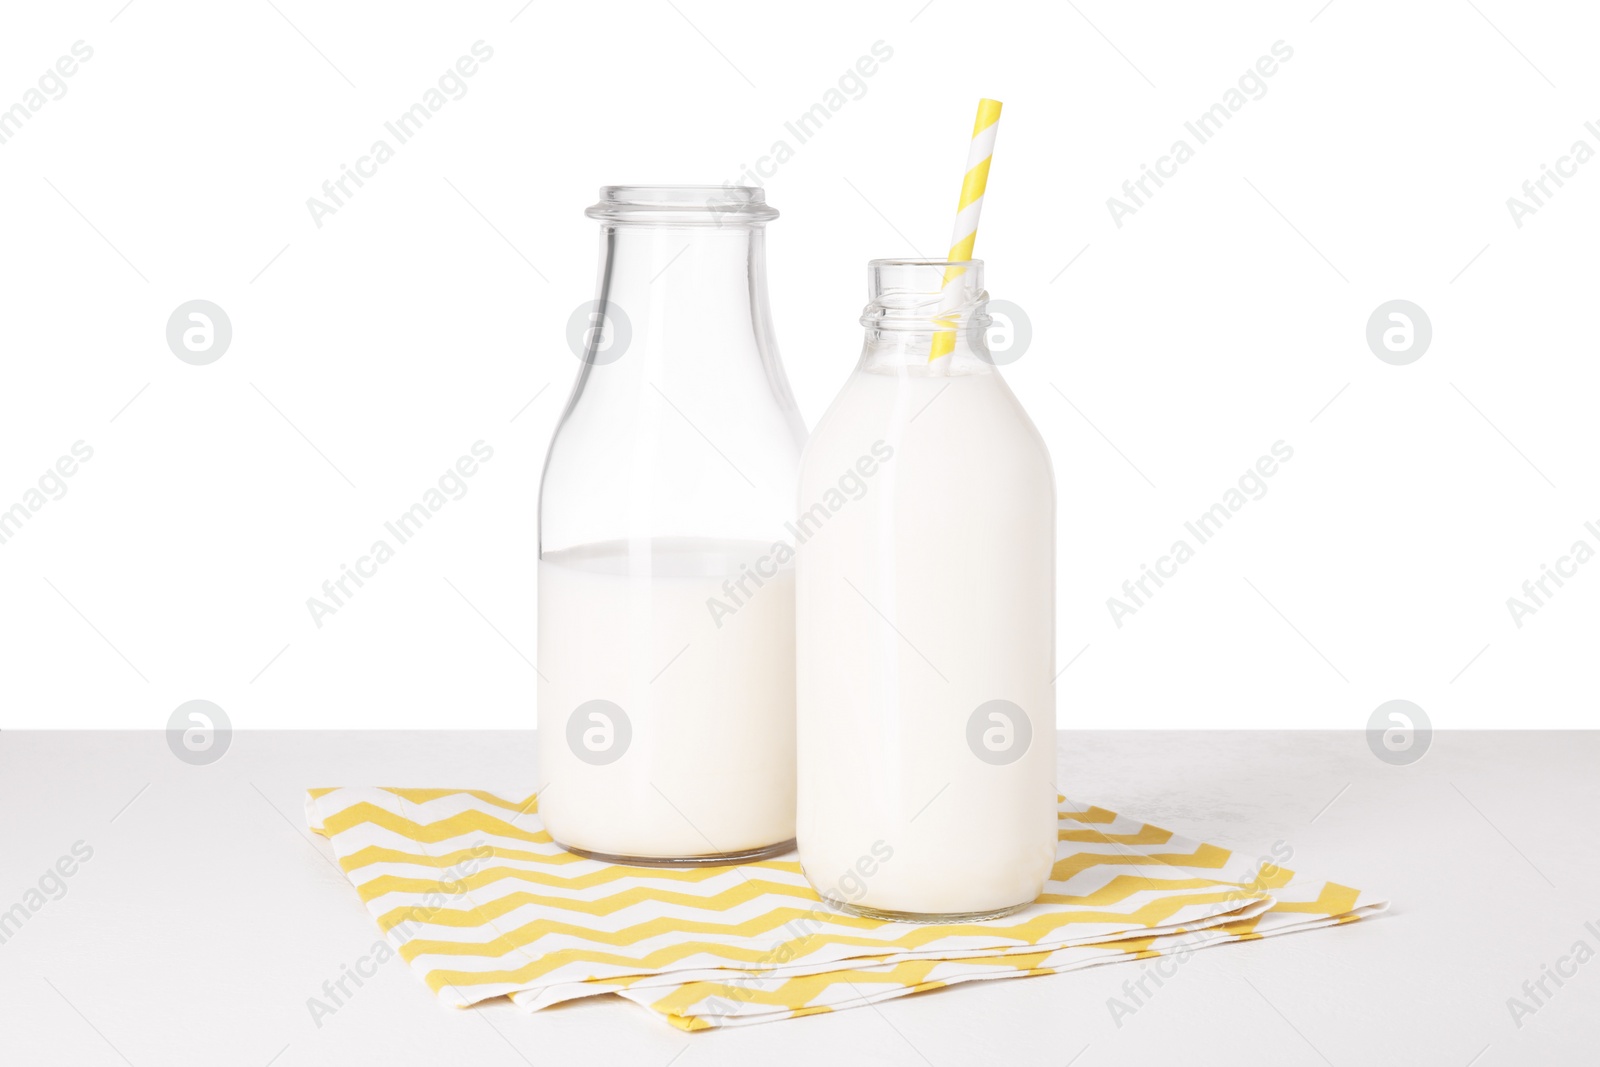 Photo of Bottles with tasty milk on light table against white background